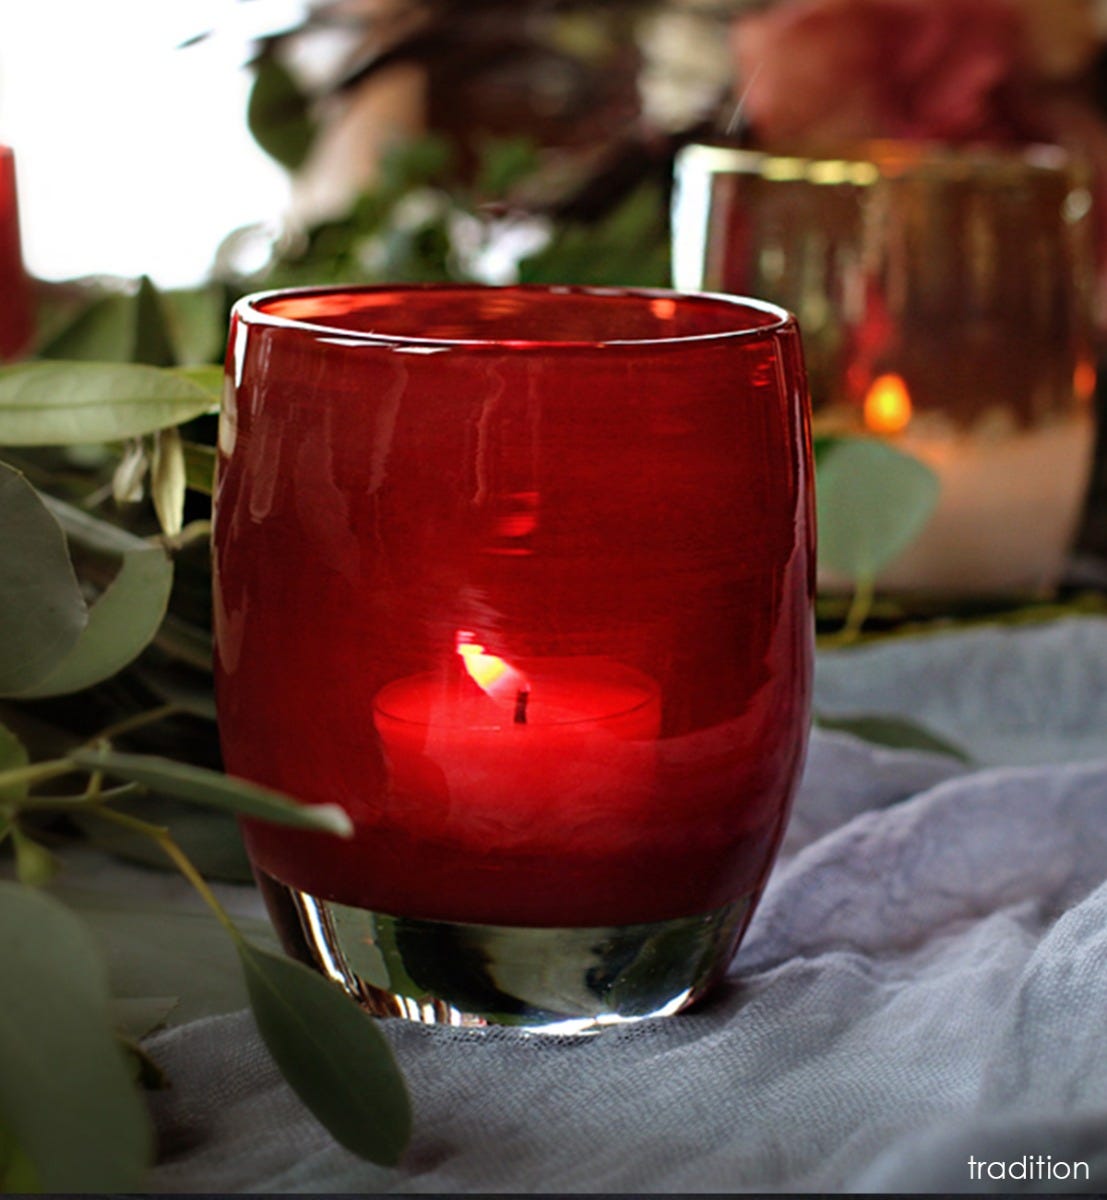 tradition, garnet hand-blown glass votive candle holder